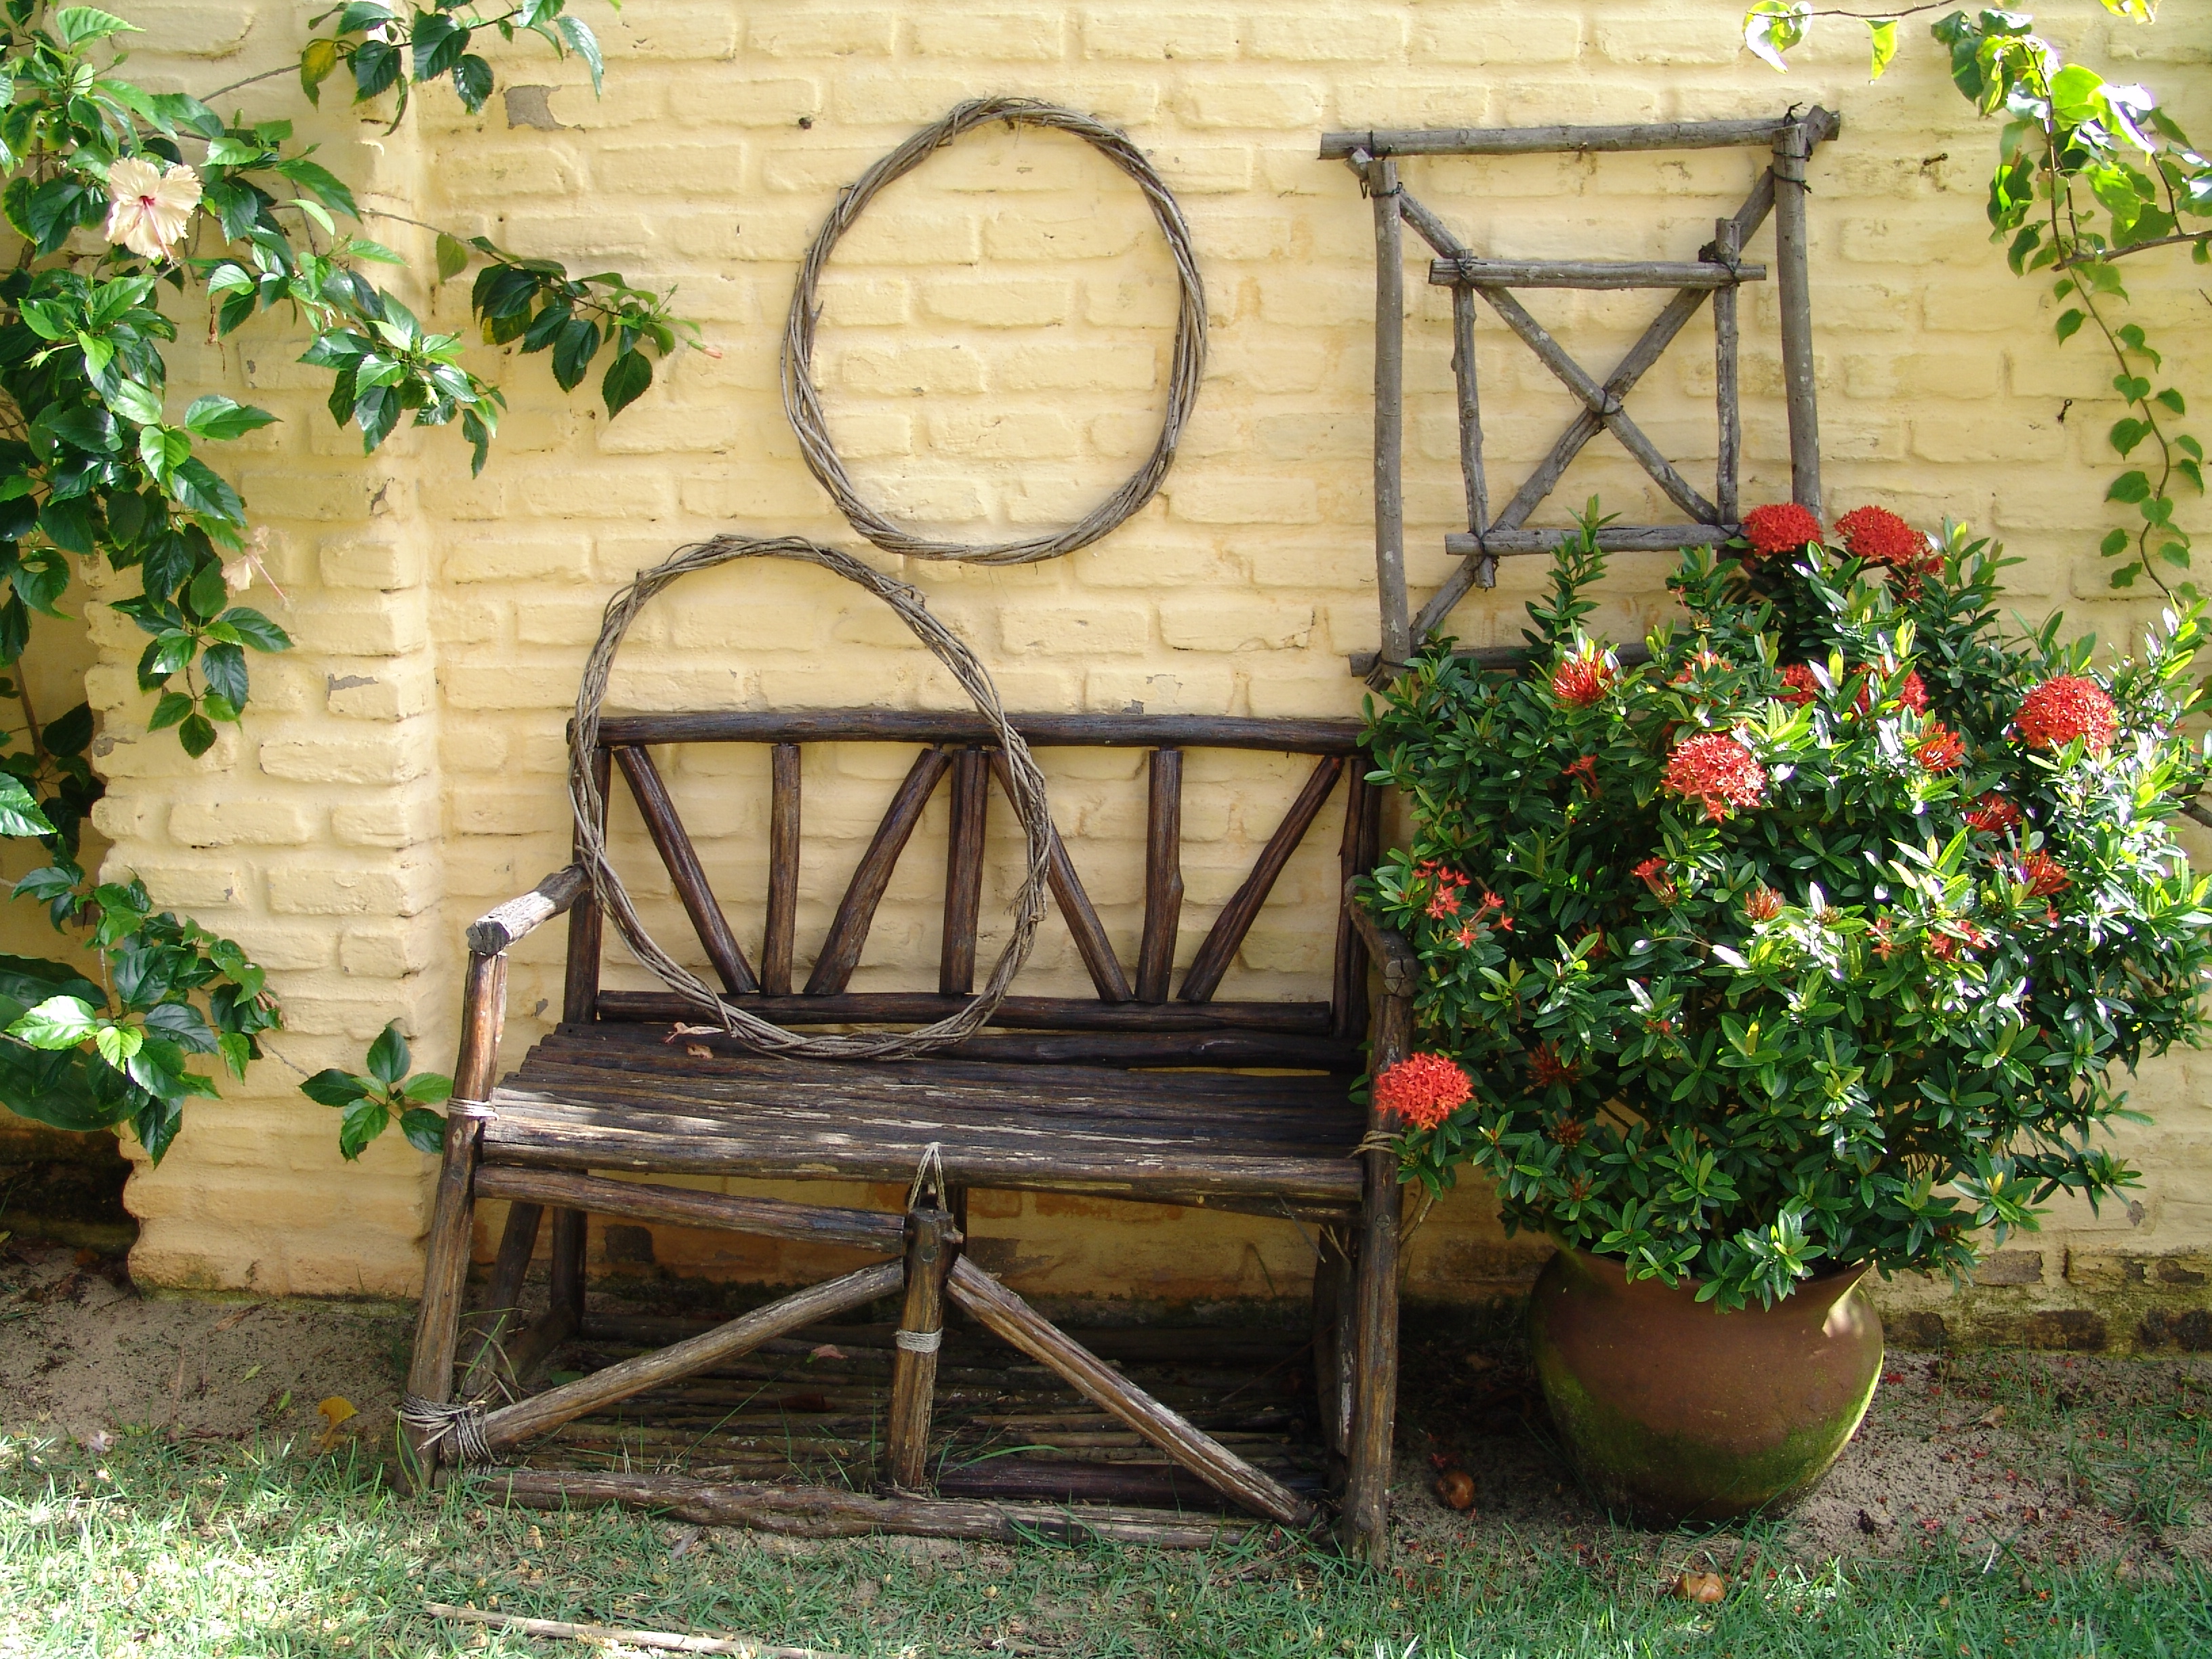 File:Wooden garden bench and trellises.jpg - Wikimedia Commons